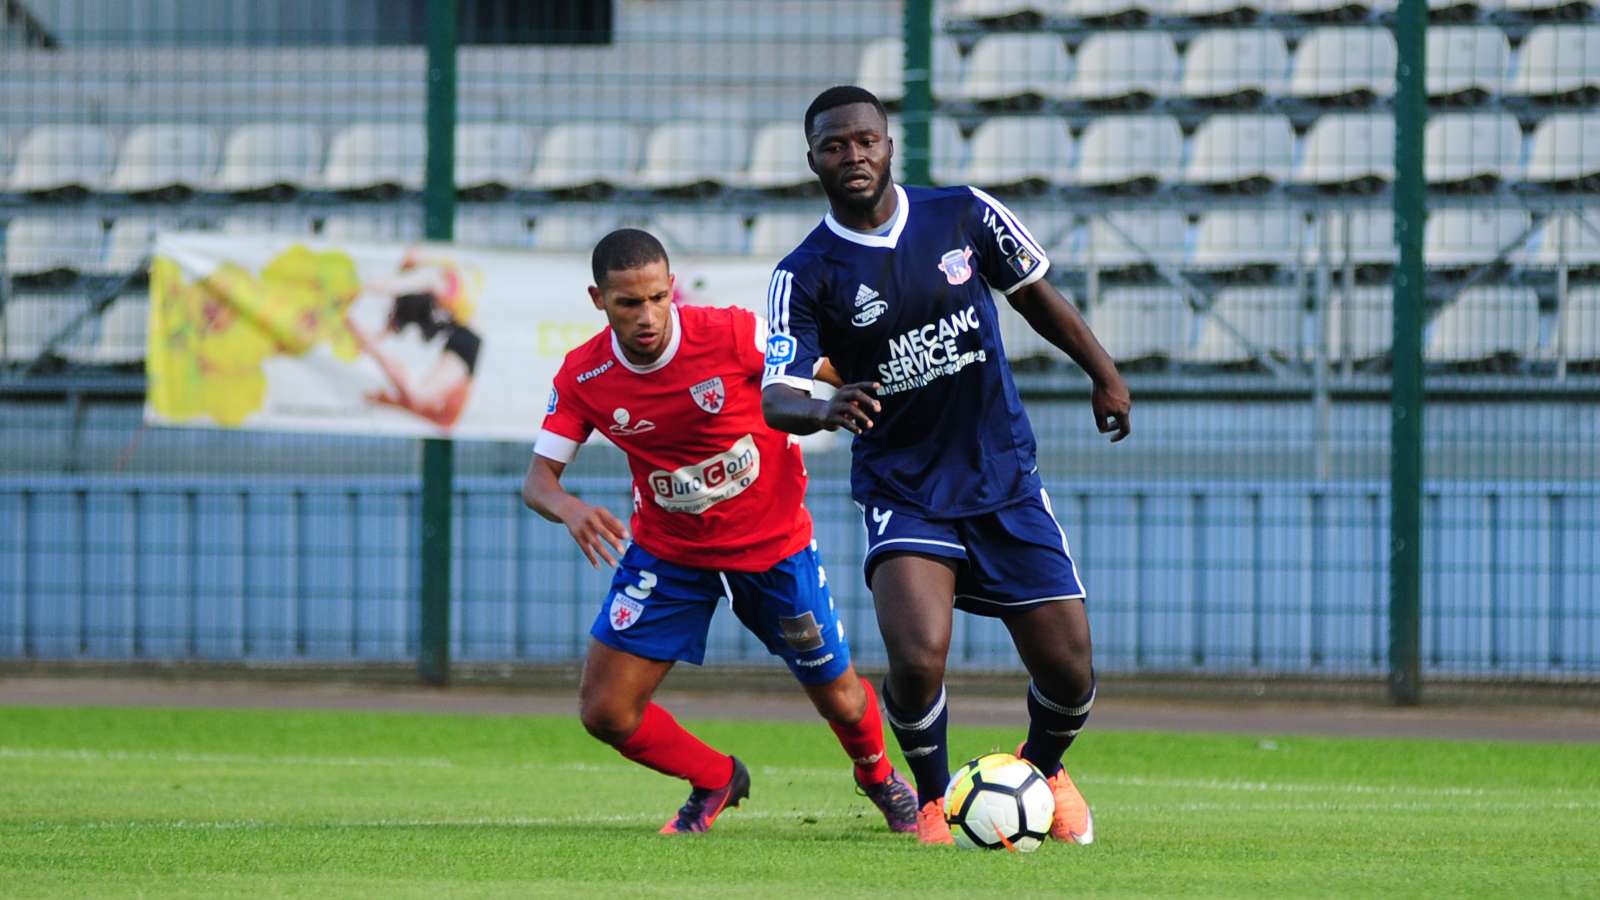 Besançon FC